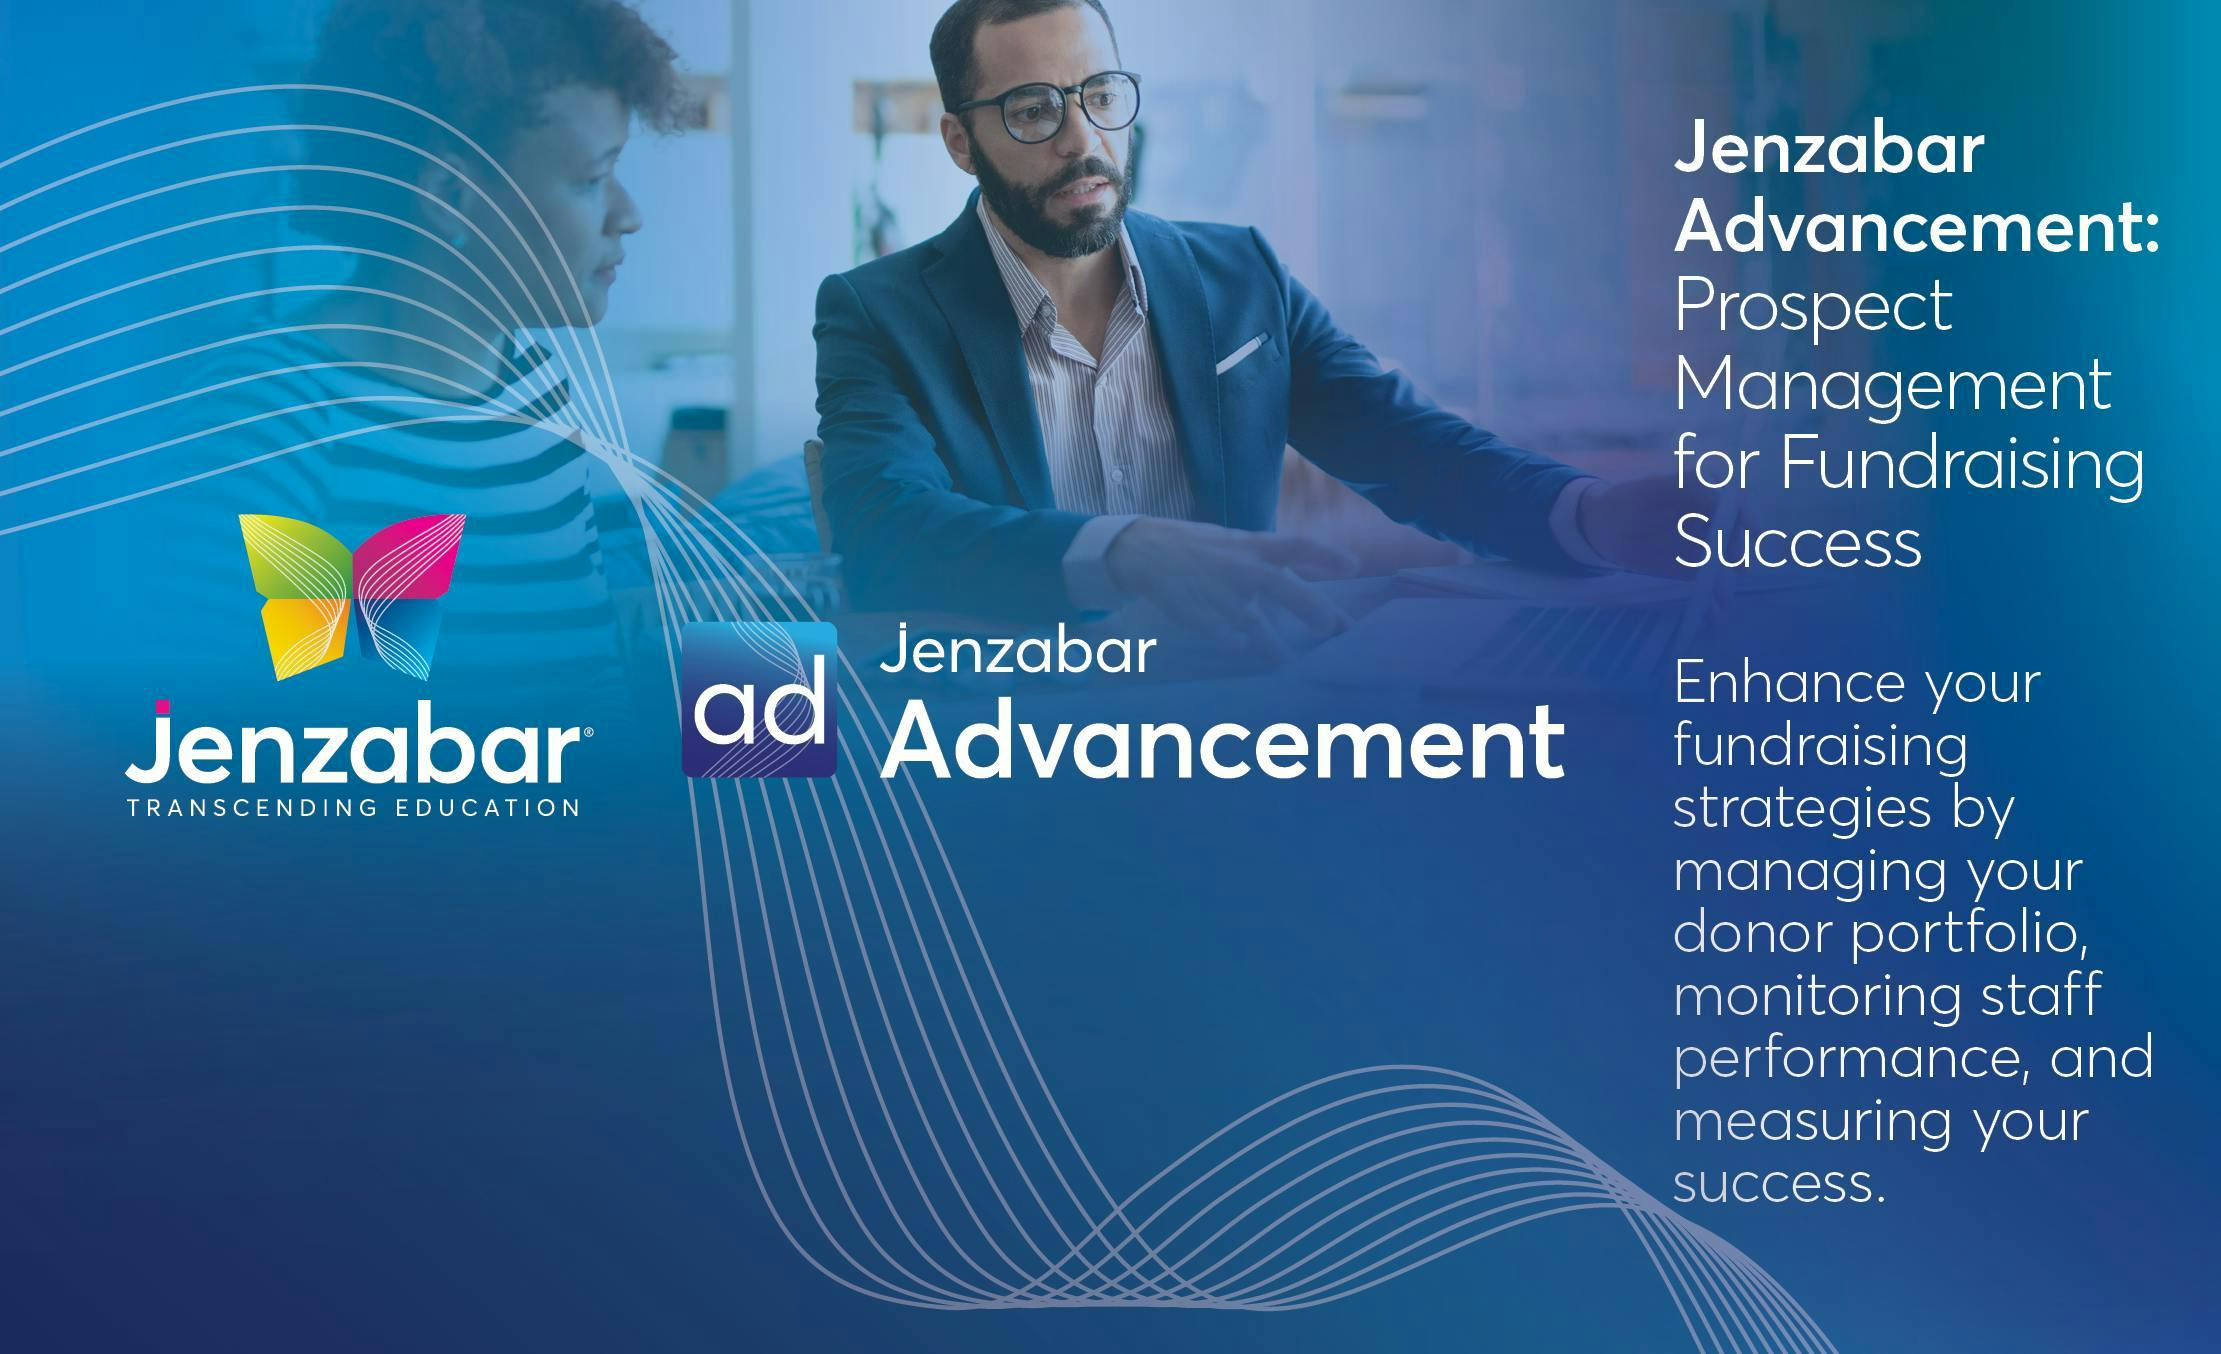 Jenzabar Advancement: Prospect Management for Fundraising Success